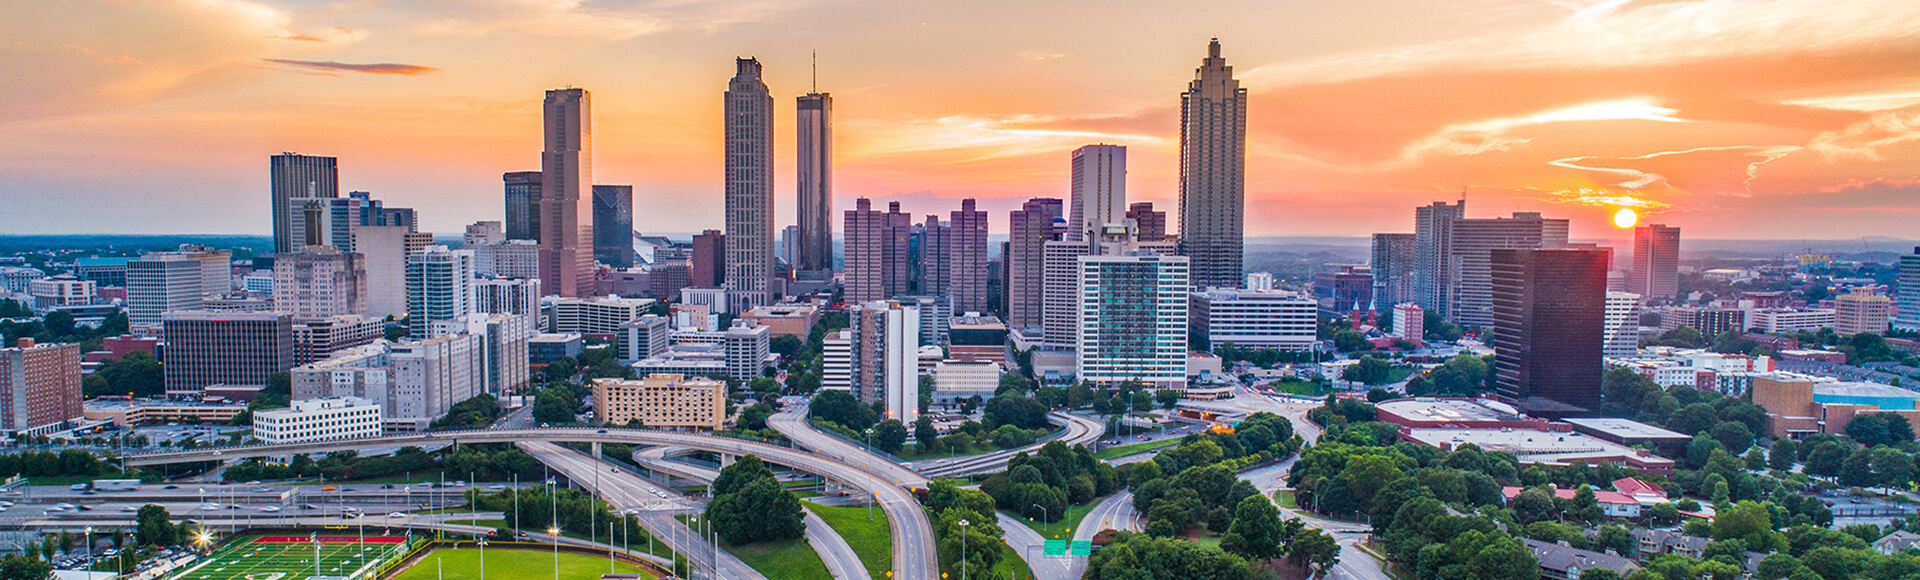 Photograph of downtown Atlanta, Georgia